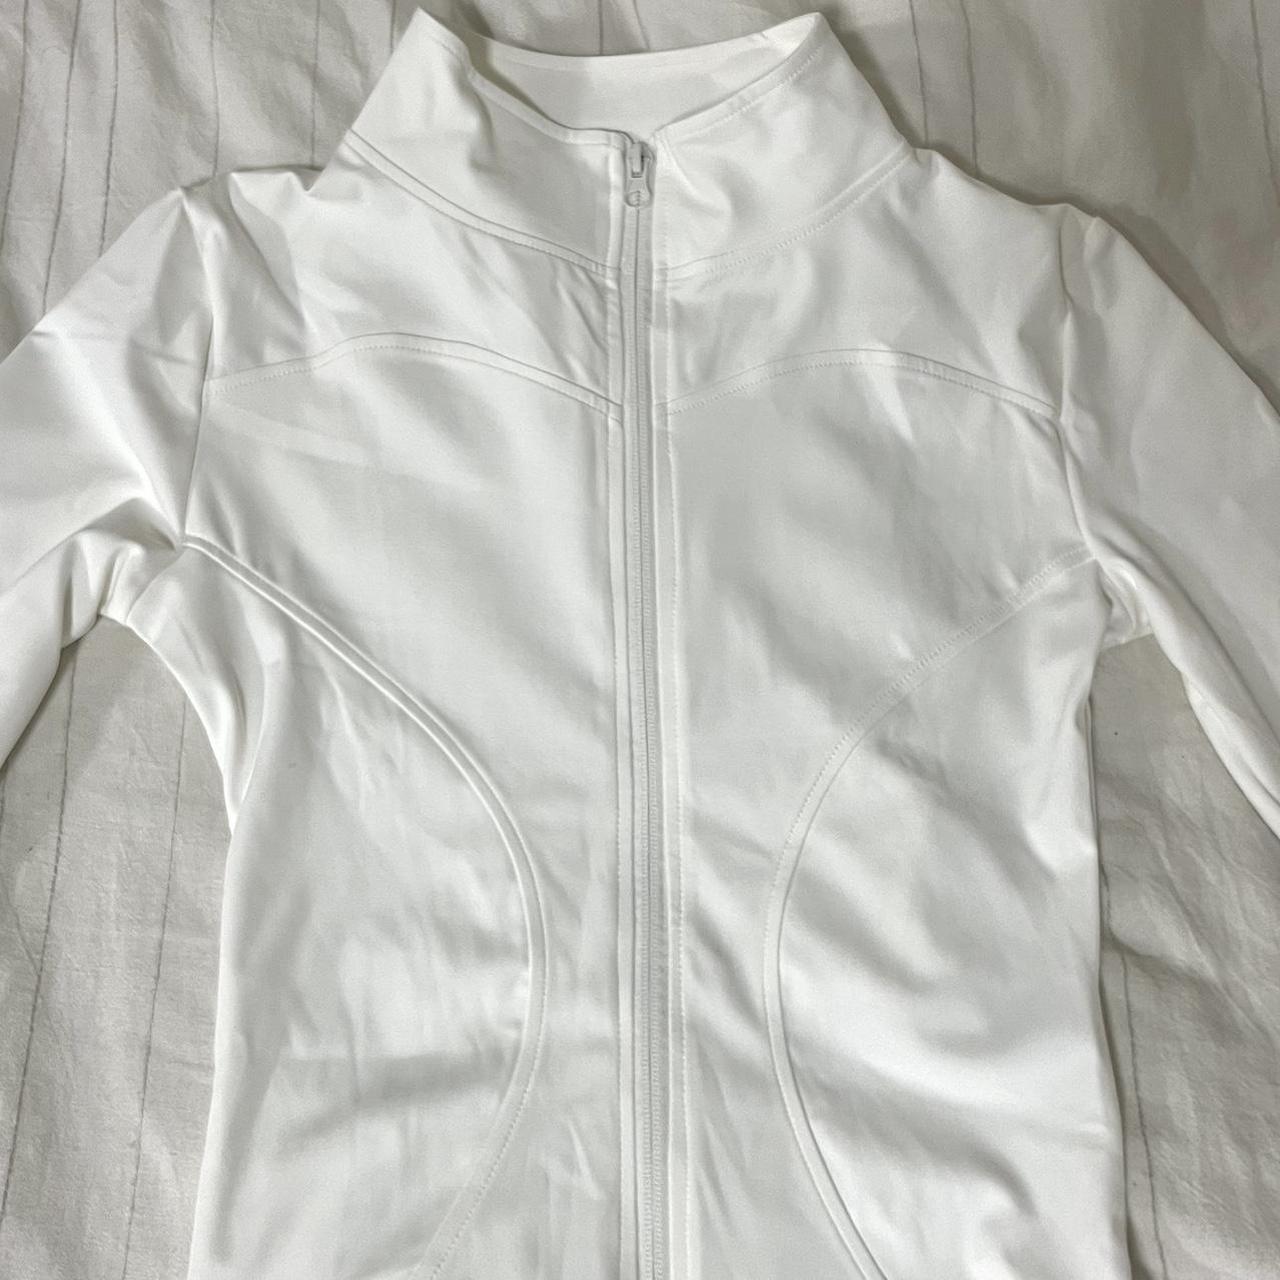 NEW Lululemon reflective running jacket #new - Depop